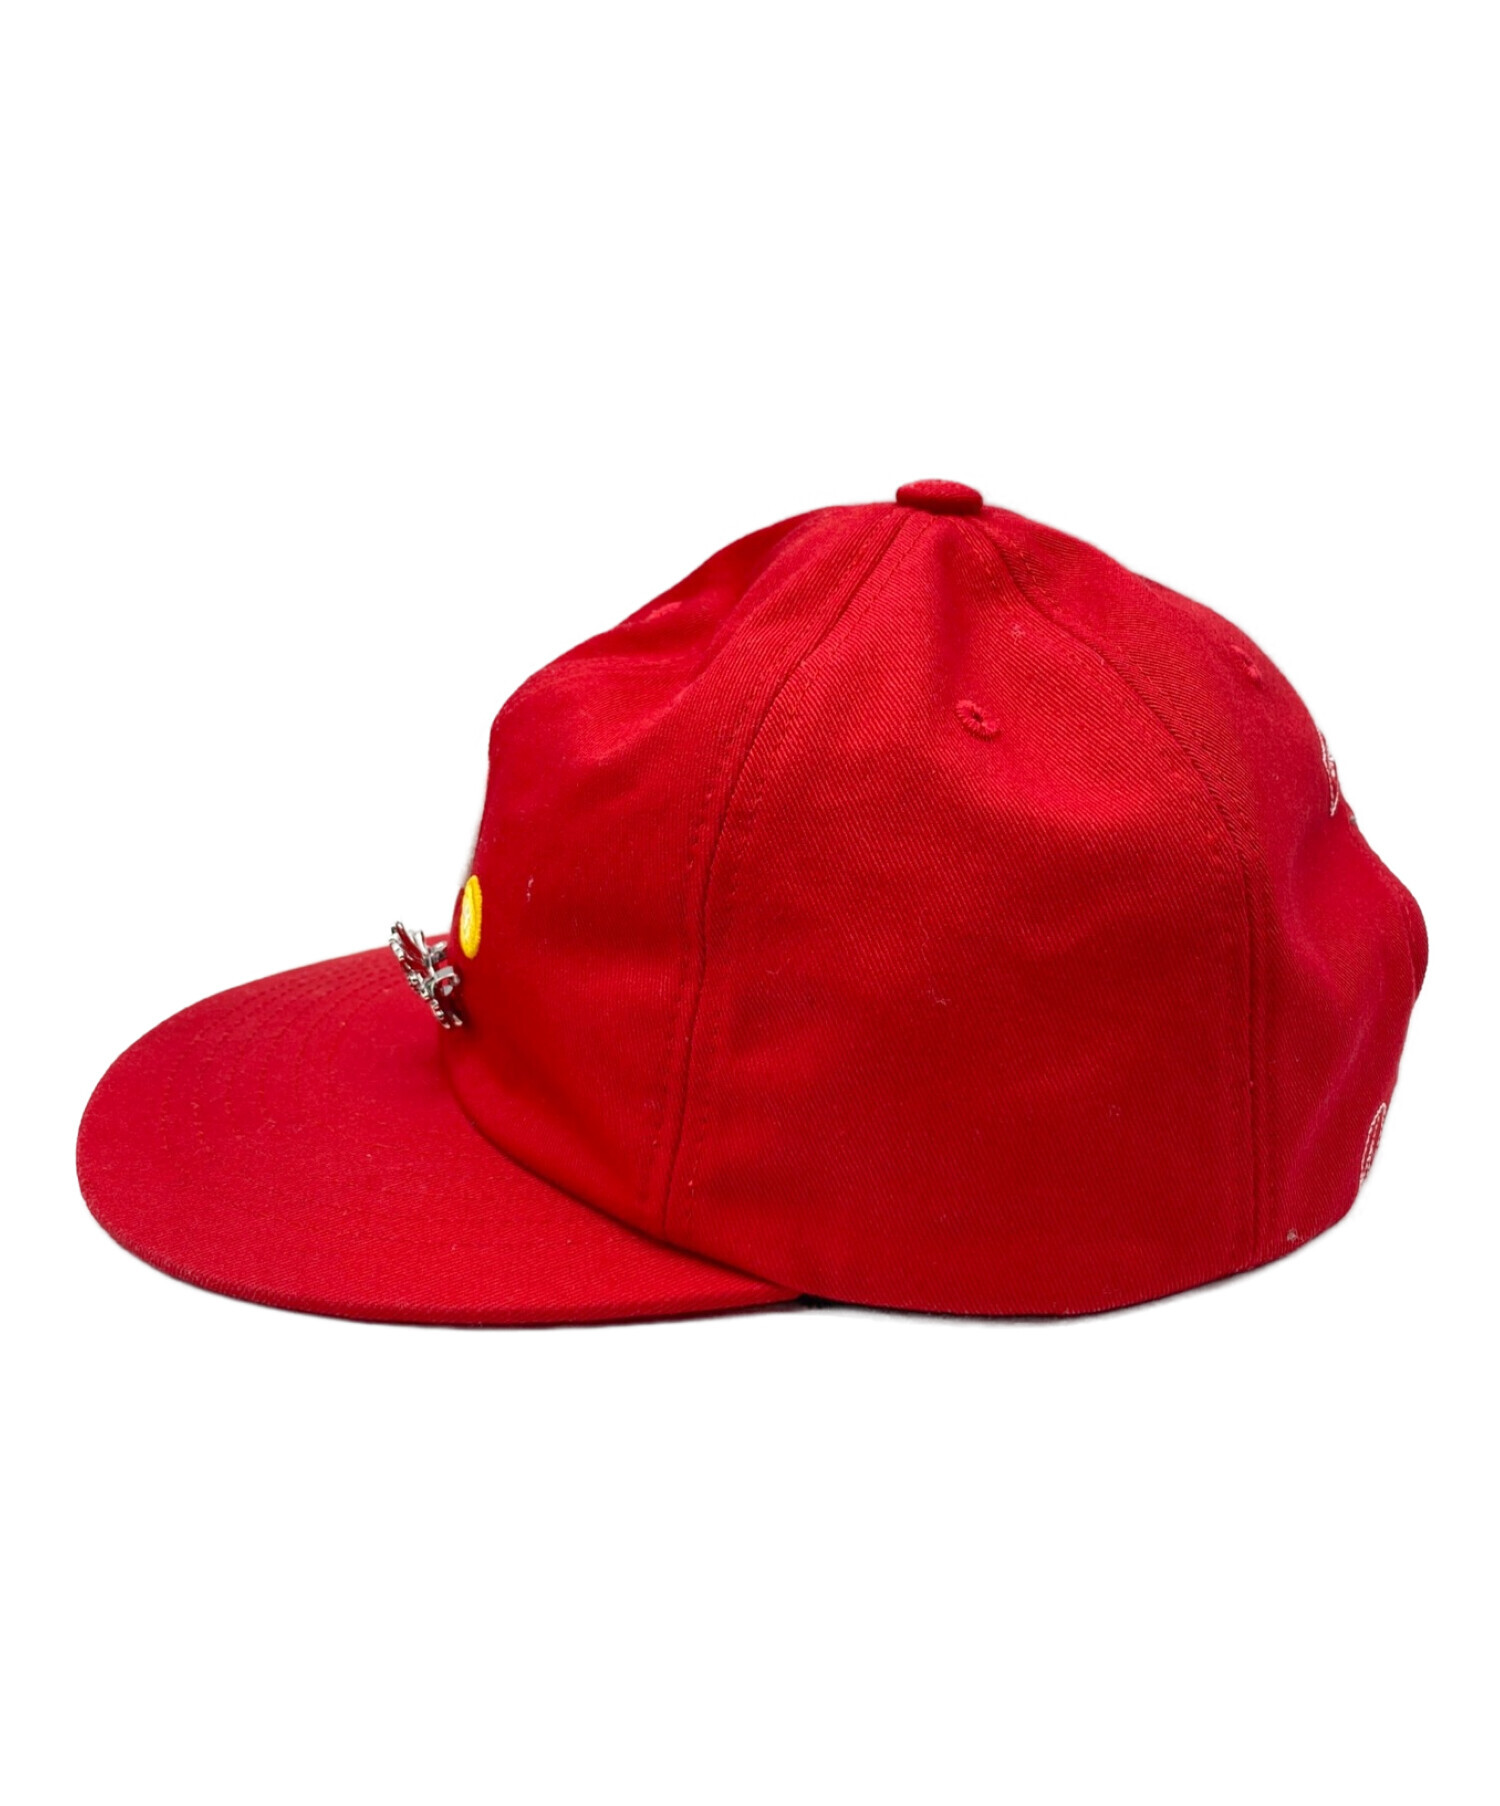 PMO BALL CAP #1 RED